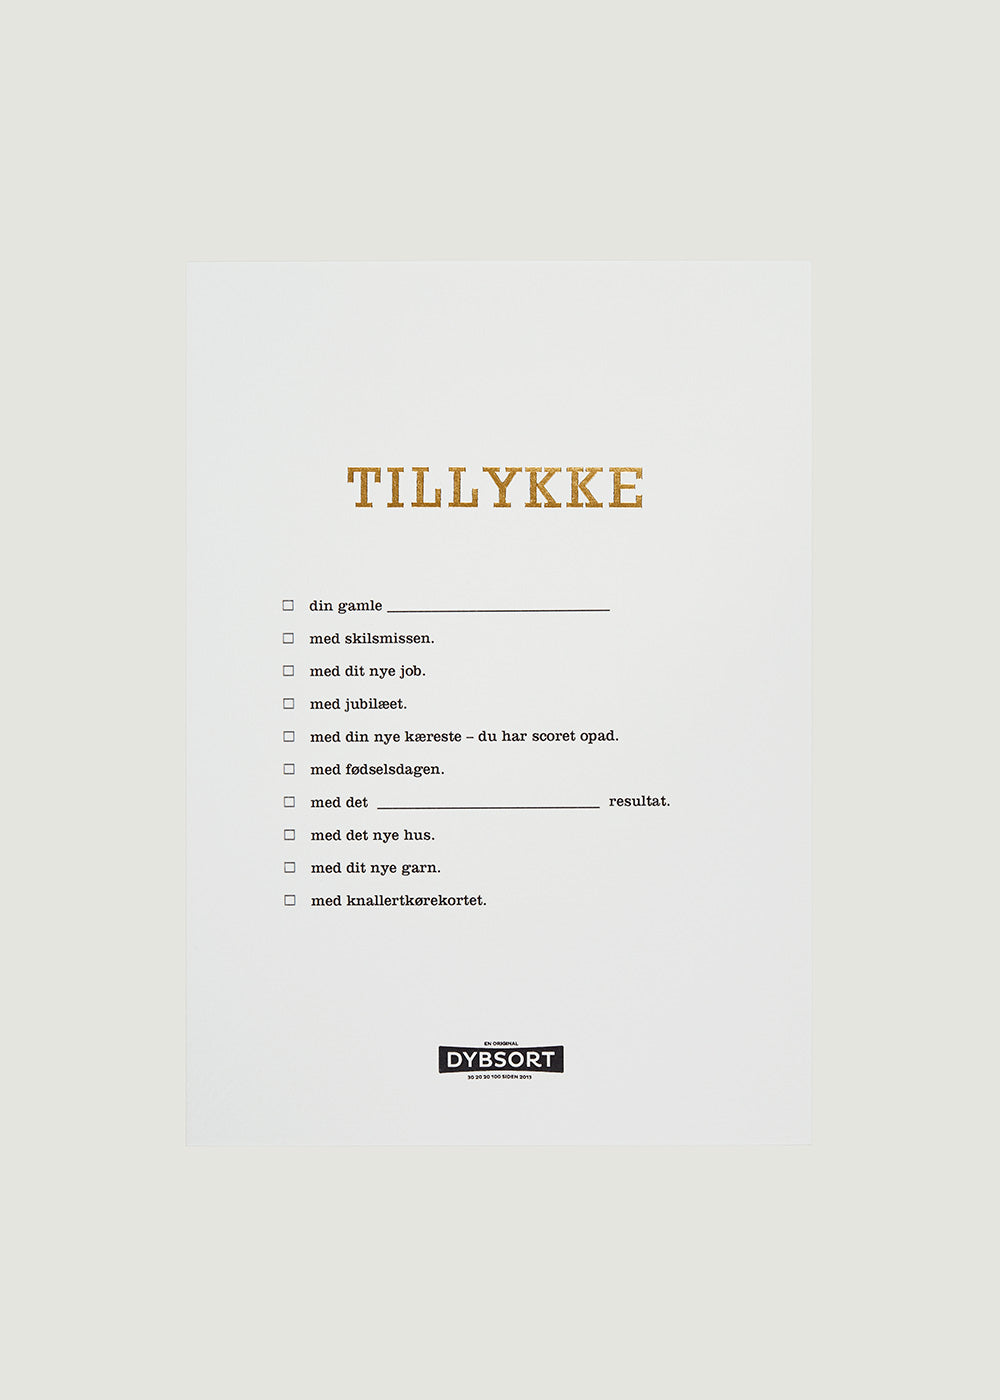 Checklist notes – TILLYKKE